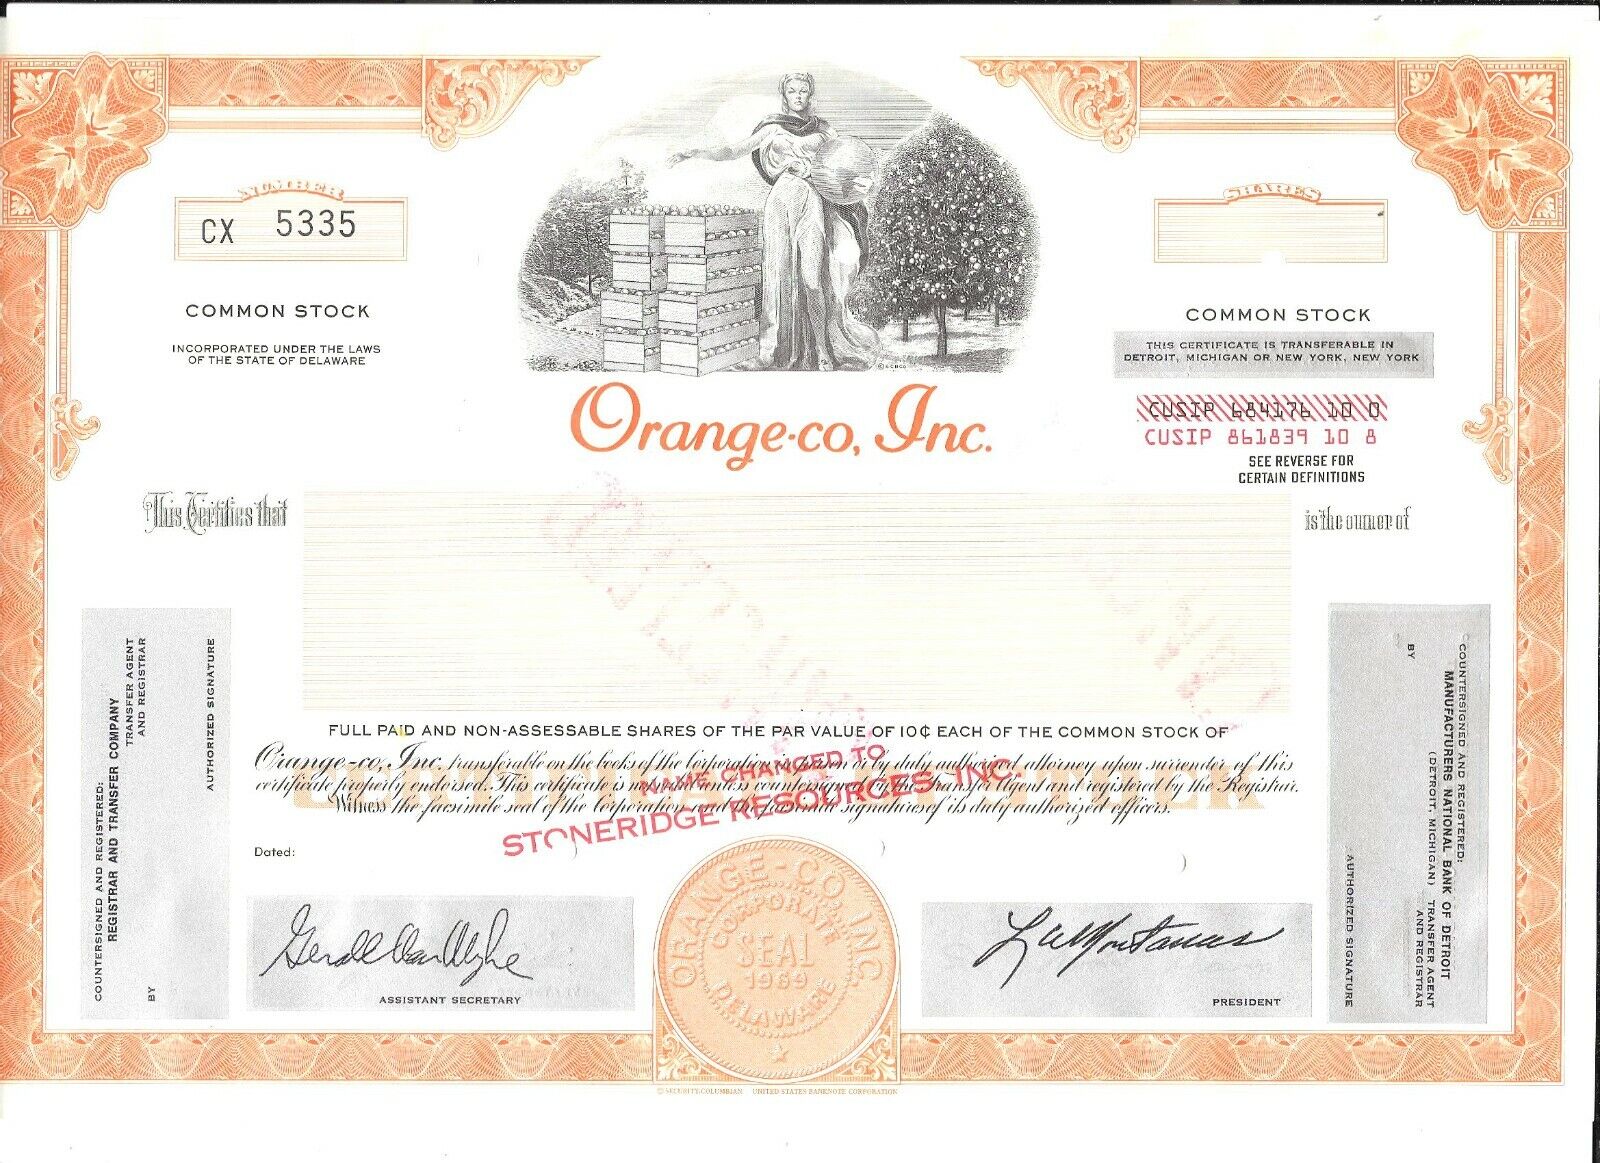 Rare Florida Orange Grower's Specimen Stock Sexy Ms. Picks Oranges Our Exclusive